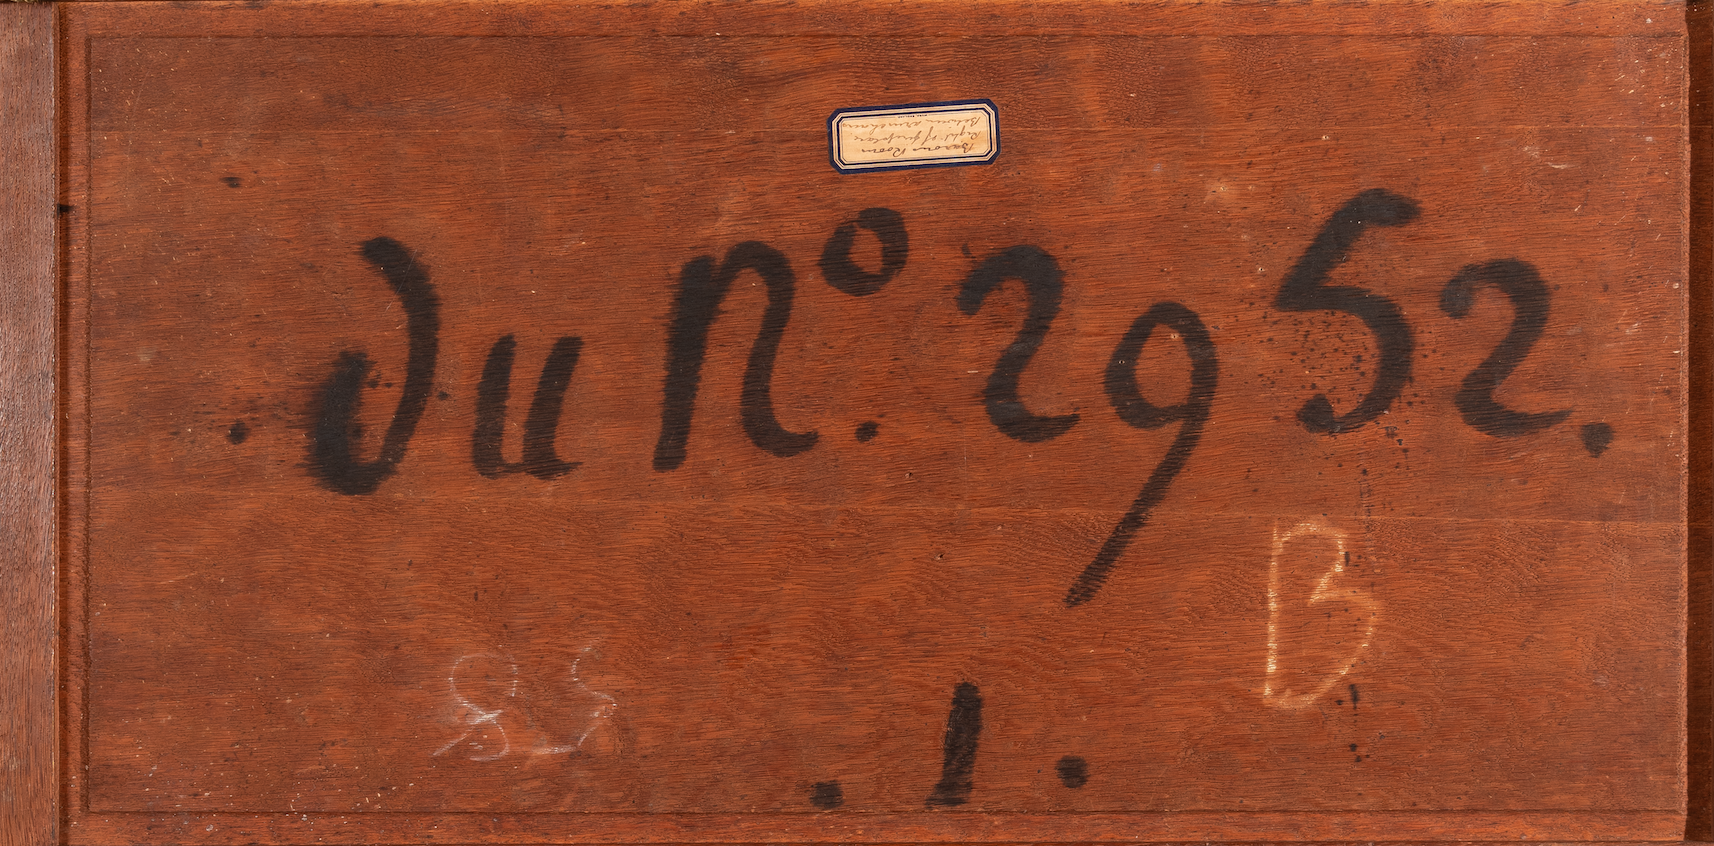 inscription underside of the desk